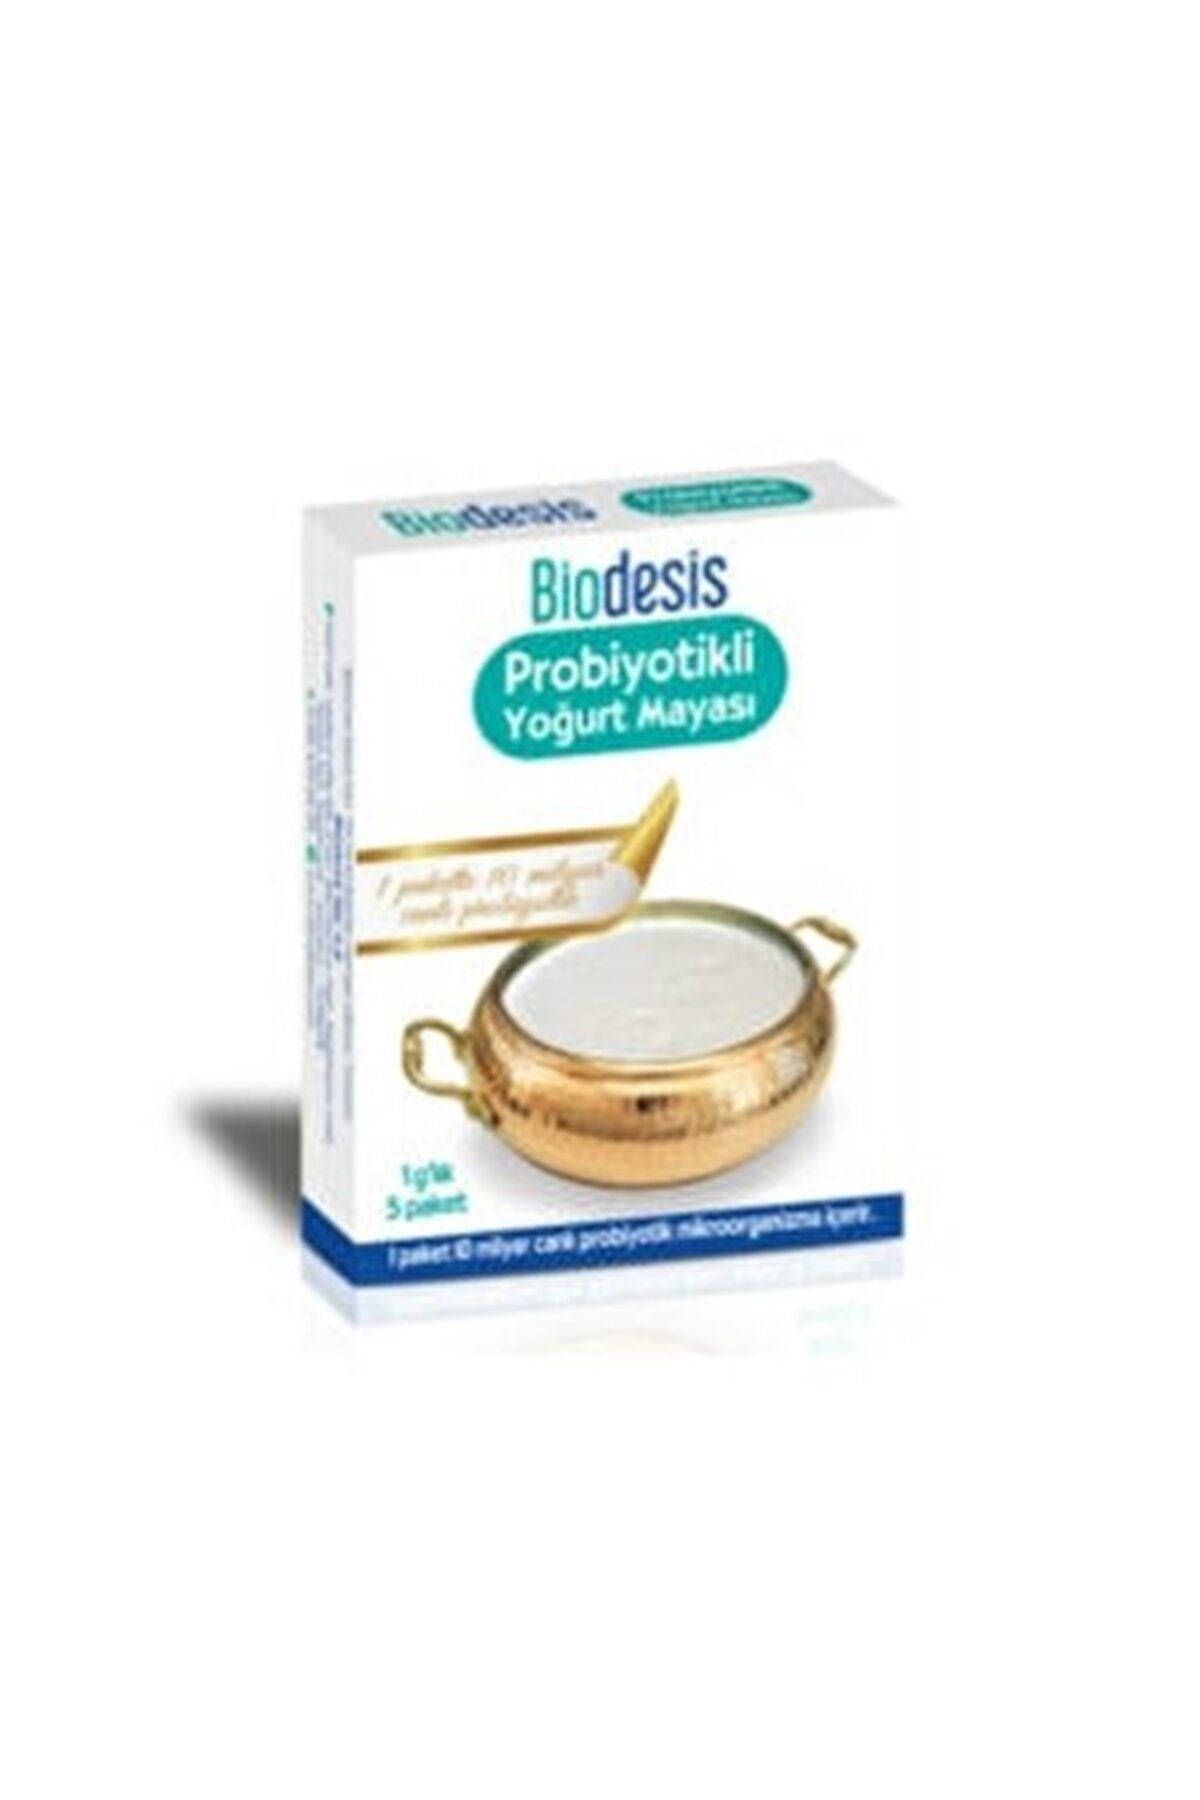 Biodesis Hünnap Probiyotikli Yoğurt Mayası 1gr X 5 Paket